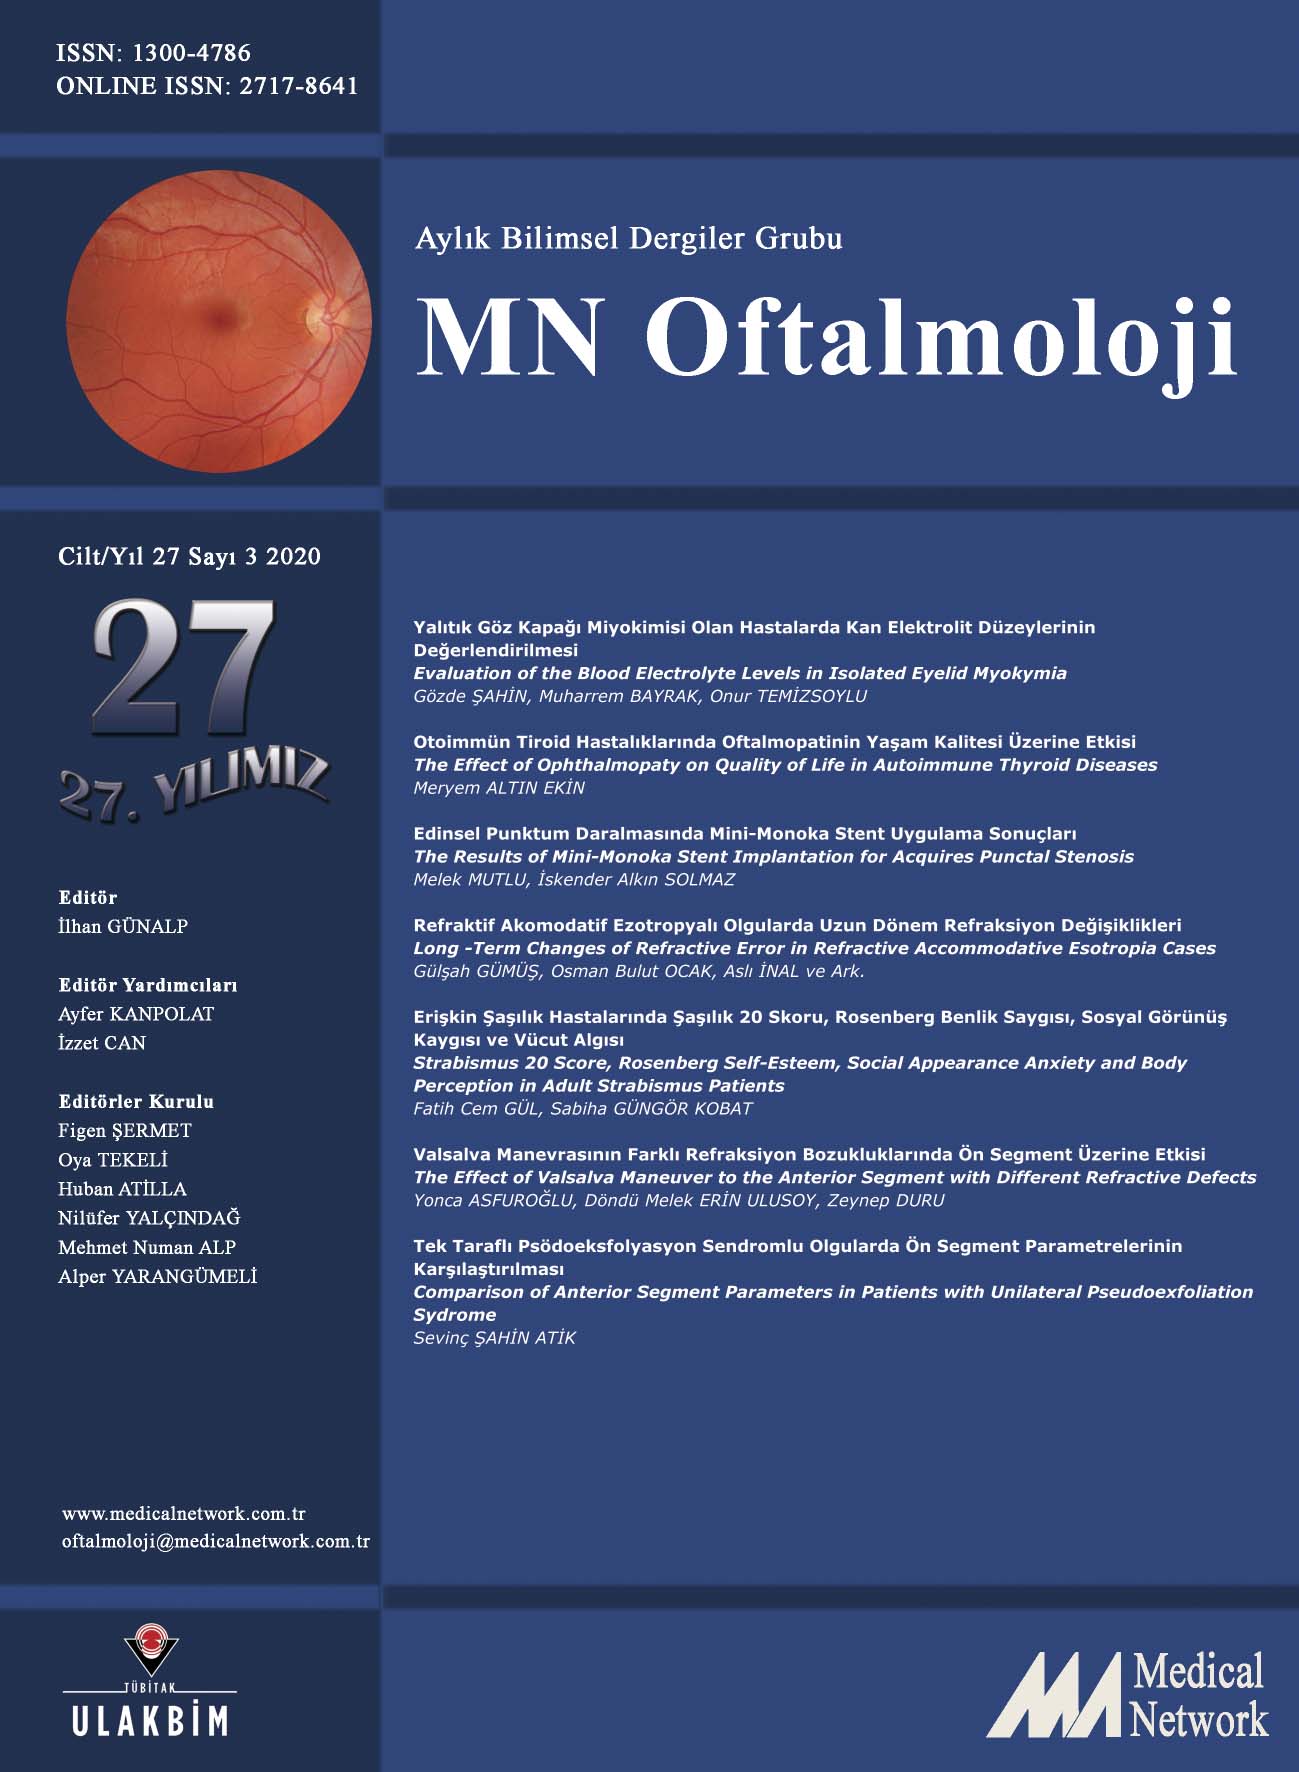 <p>MN Oftalmoloji Cilt: 27 Say: 3 2020 (MN Ophthalmology Volume: 27 No: 3 2020)</p>